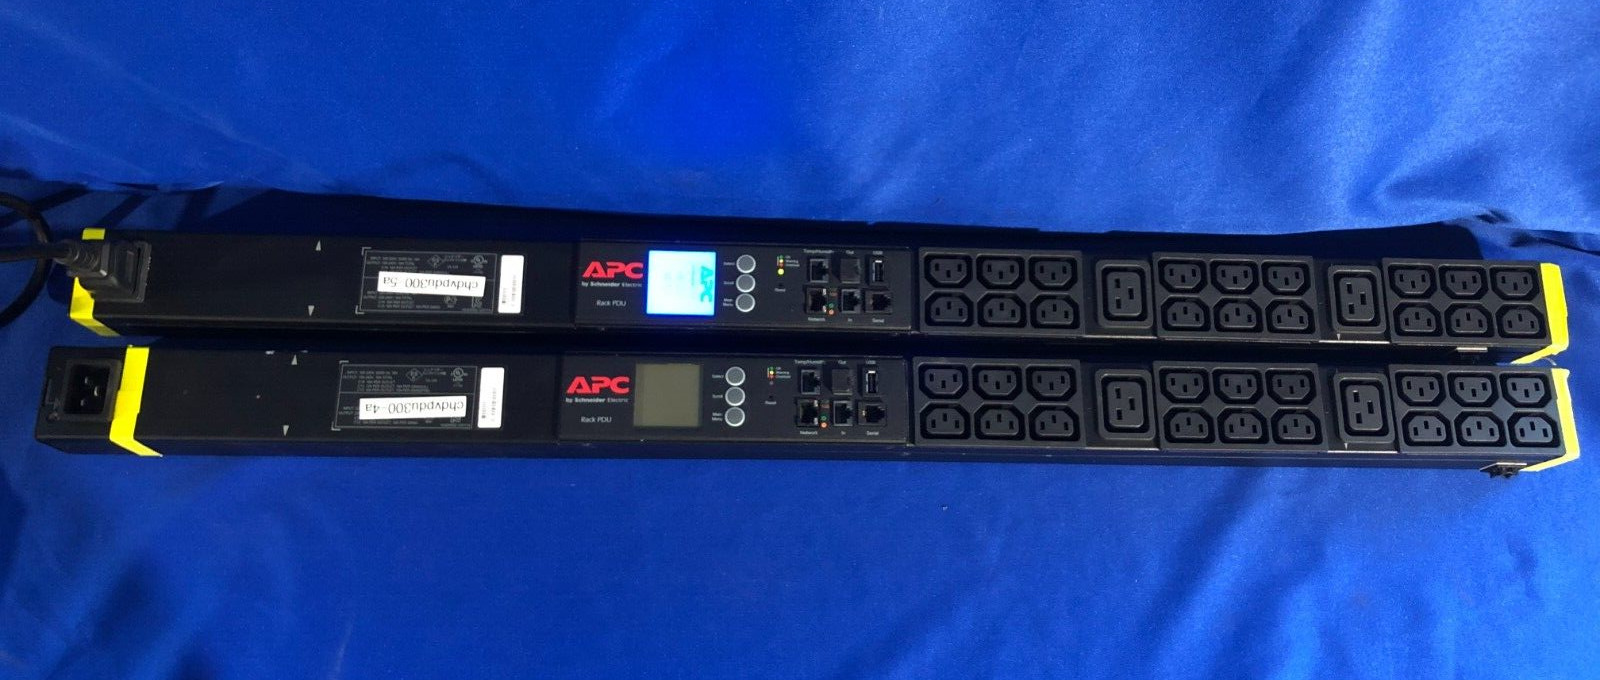 Lot: 2x APC Rack PDU Power Distribution AP8858 - Partially Tested - Read Desc.